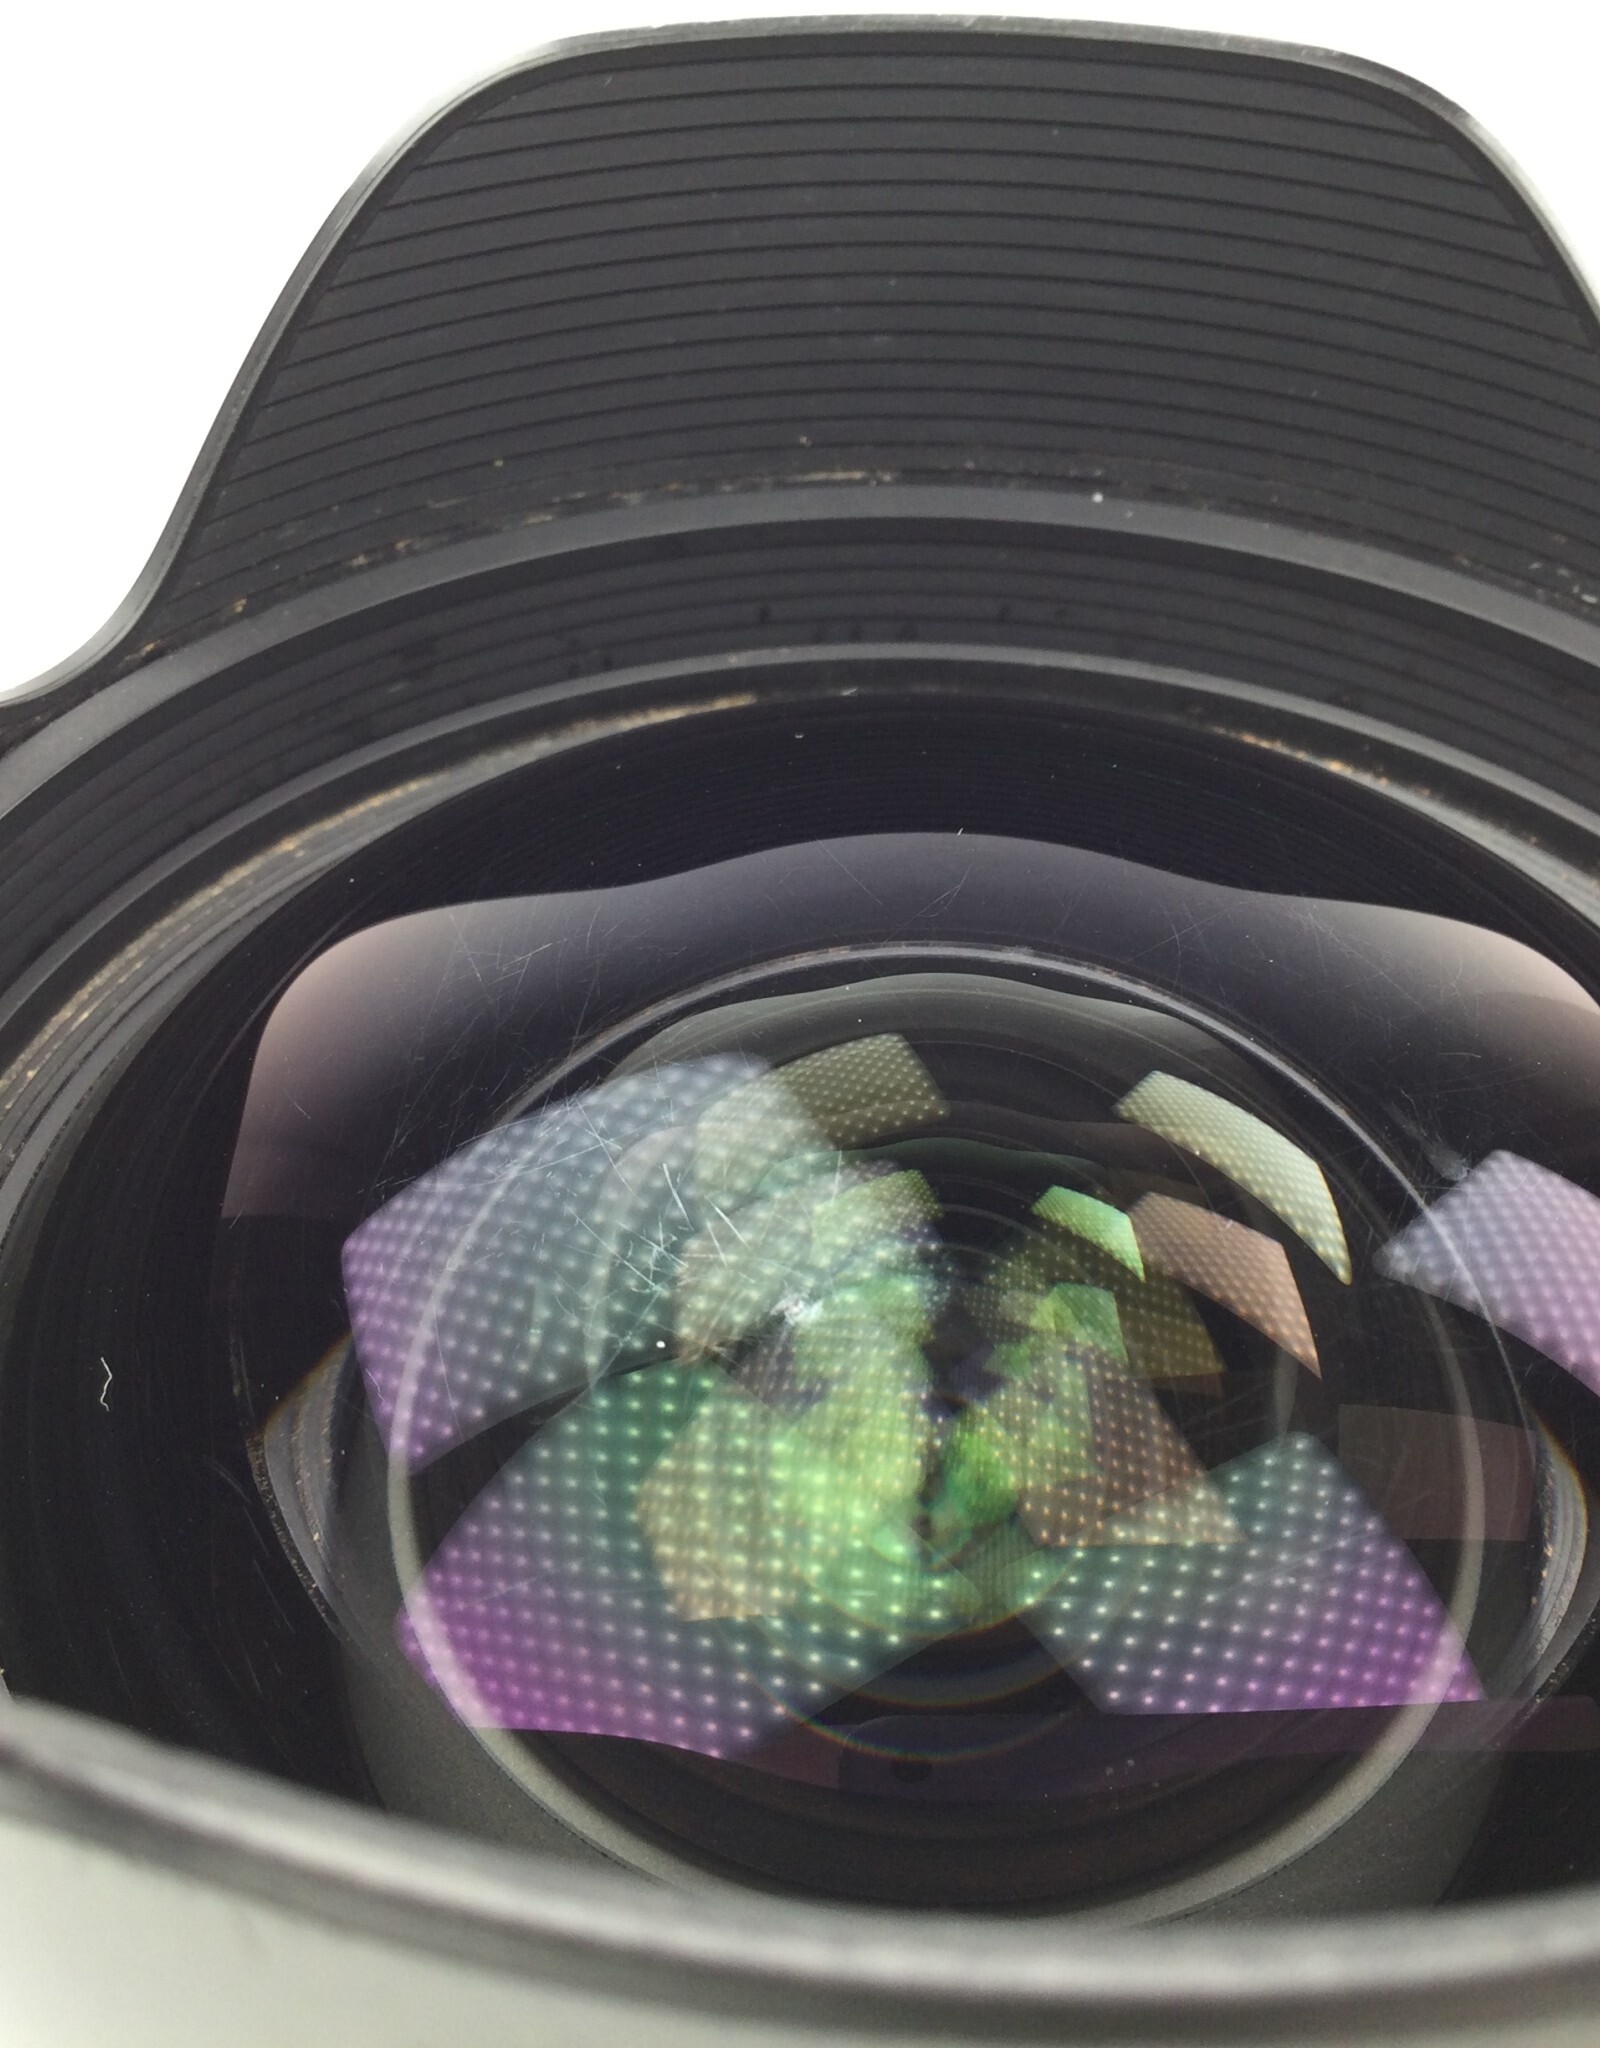 SIGMA Sigma Art 14-24mm f2.8 DG Lens for Nikon Used Fair